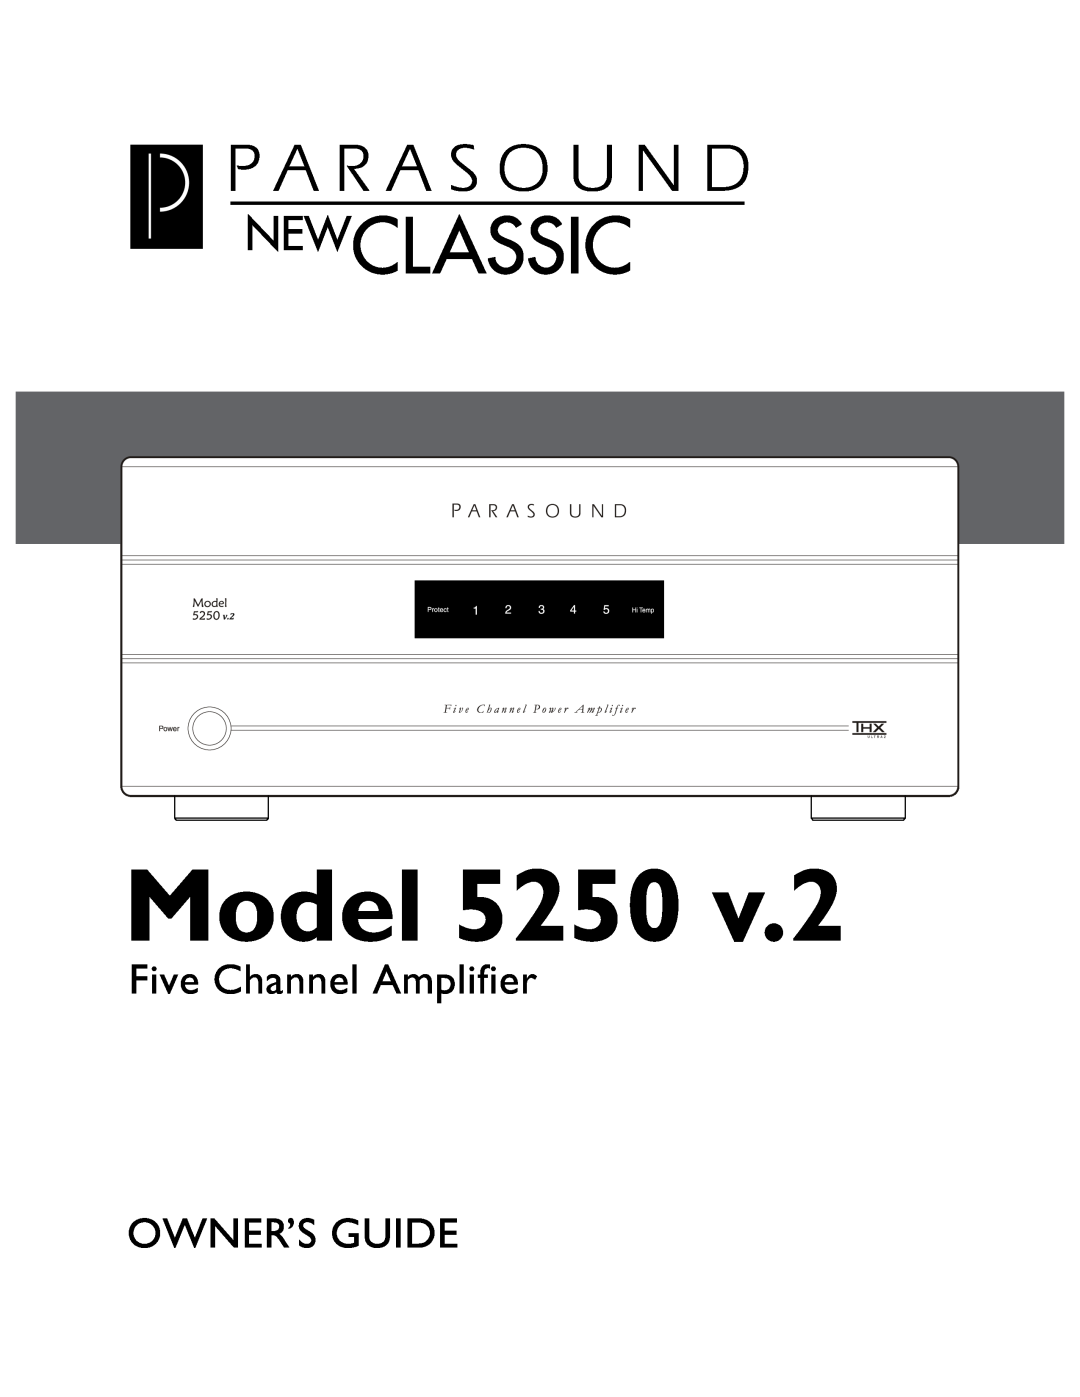 Parasound 5250 V.2 manual Model 5250, Five Channel Amplifier 